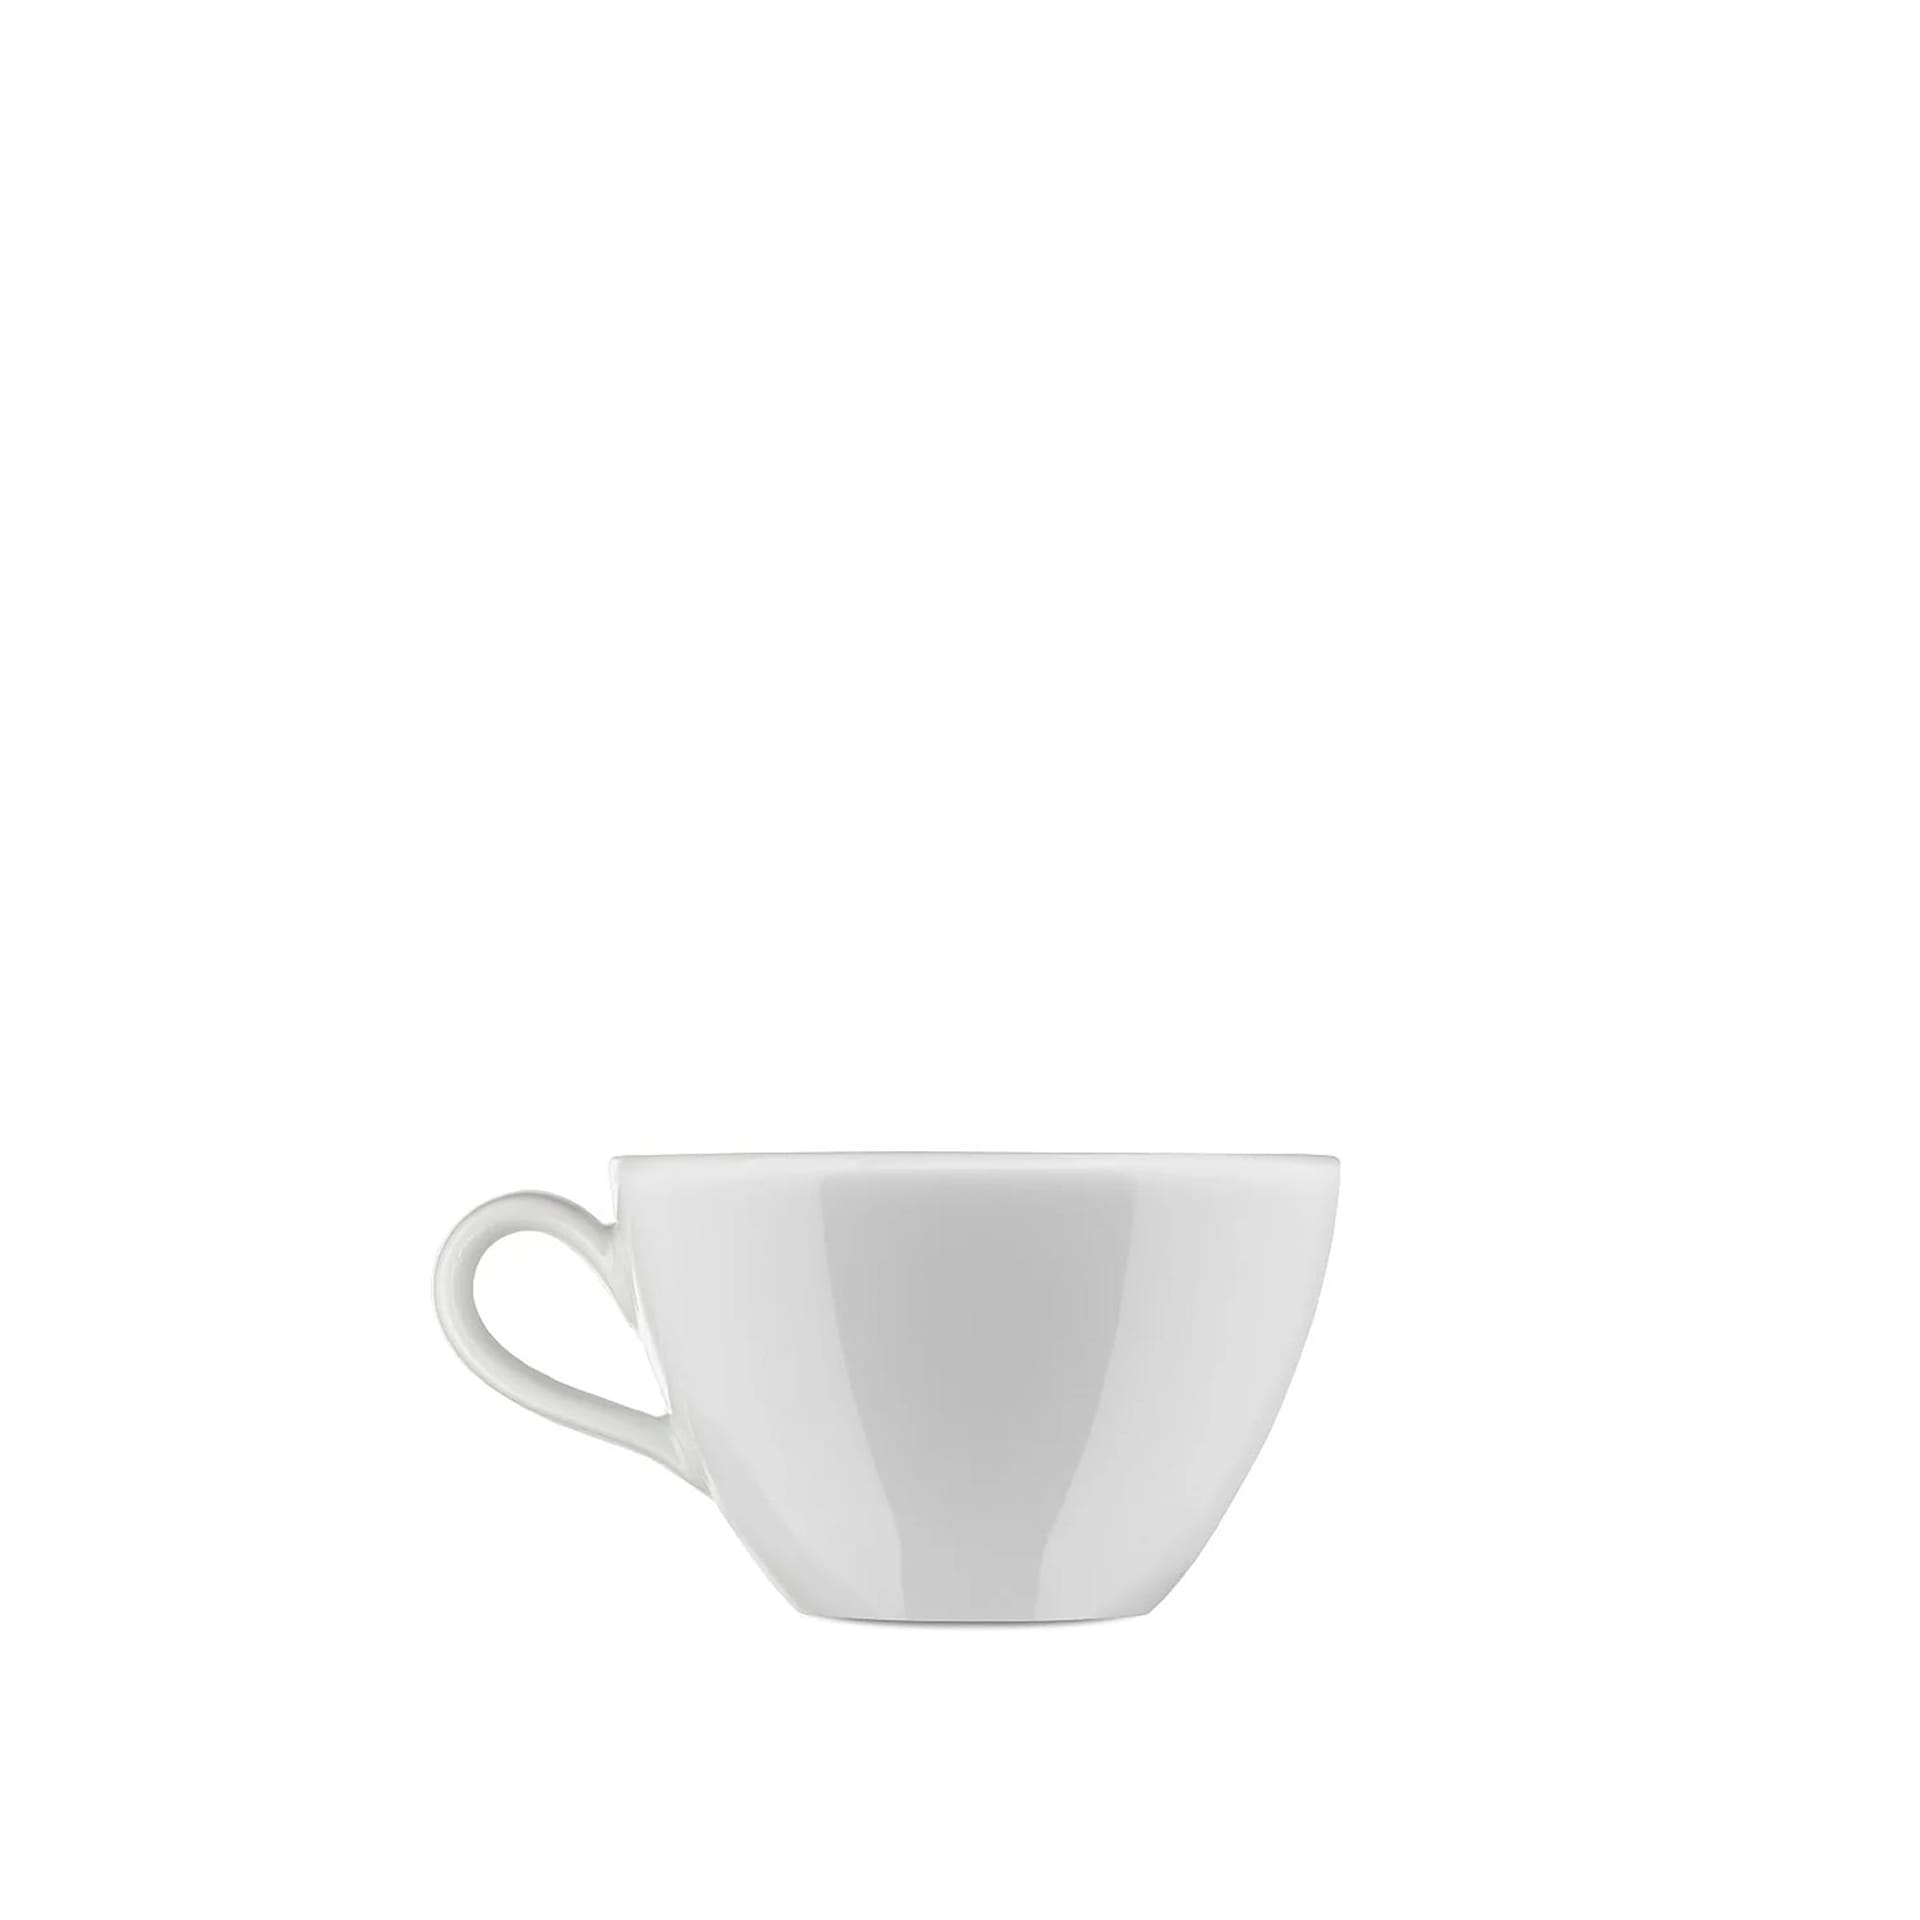 Mami Cappuccino cup - Alessi - NO GA